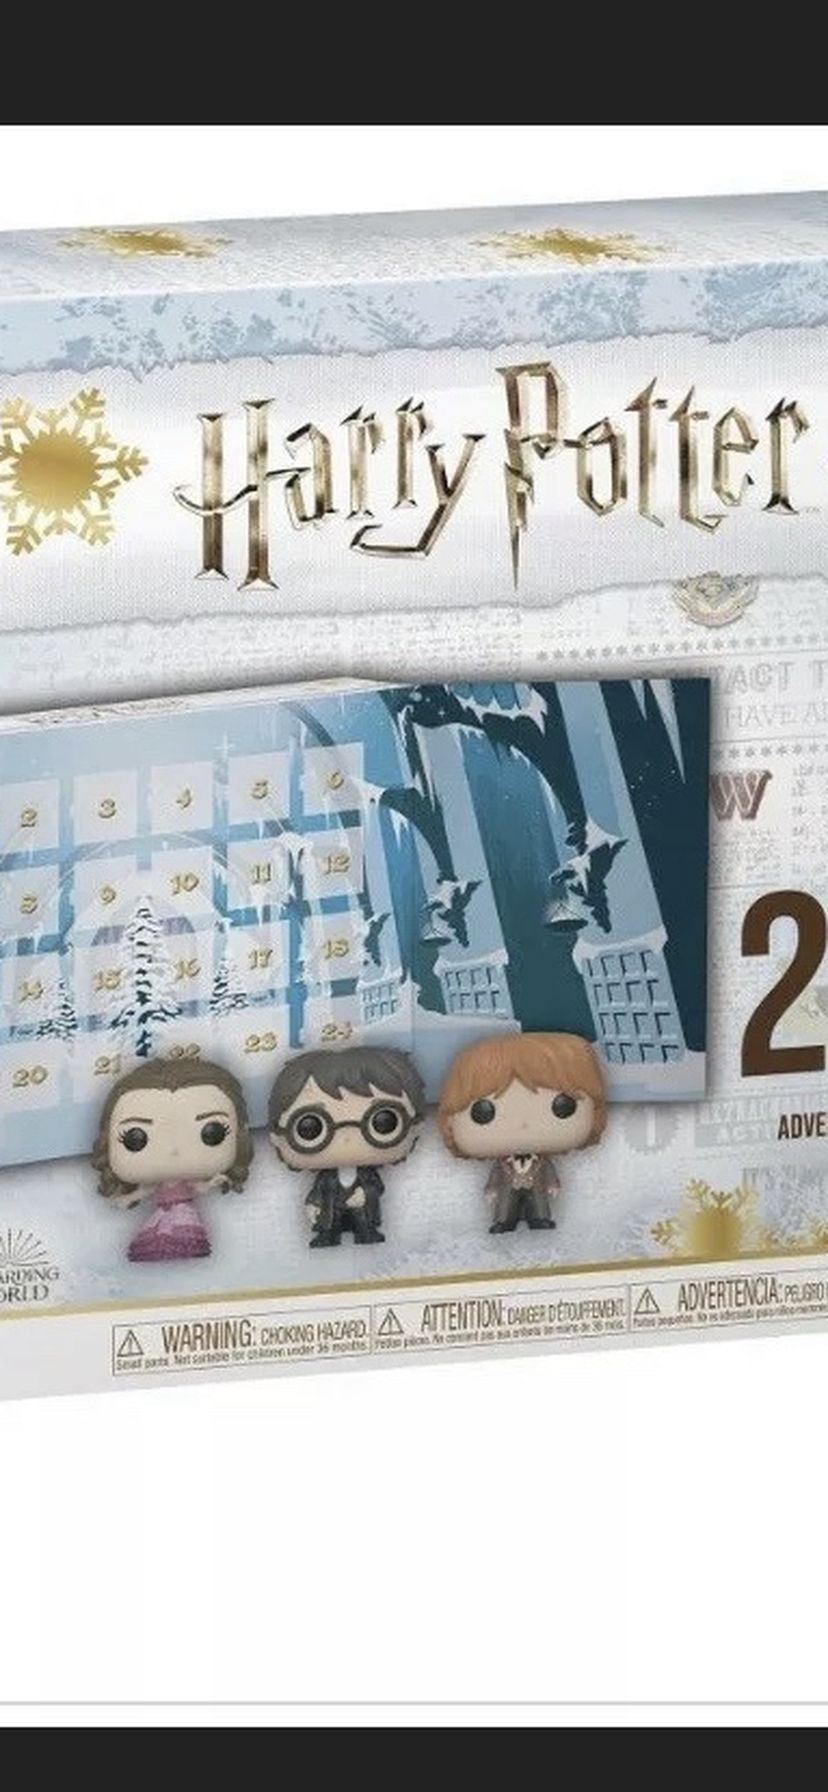 Harry Potter advent calendar 2019